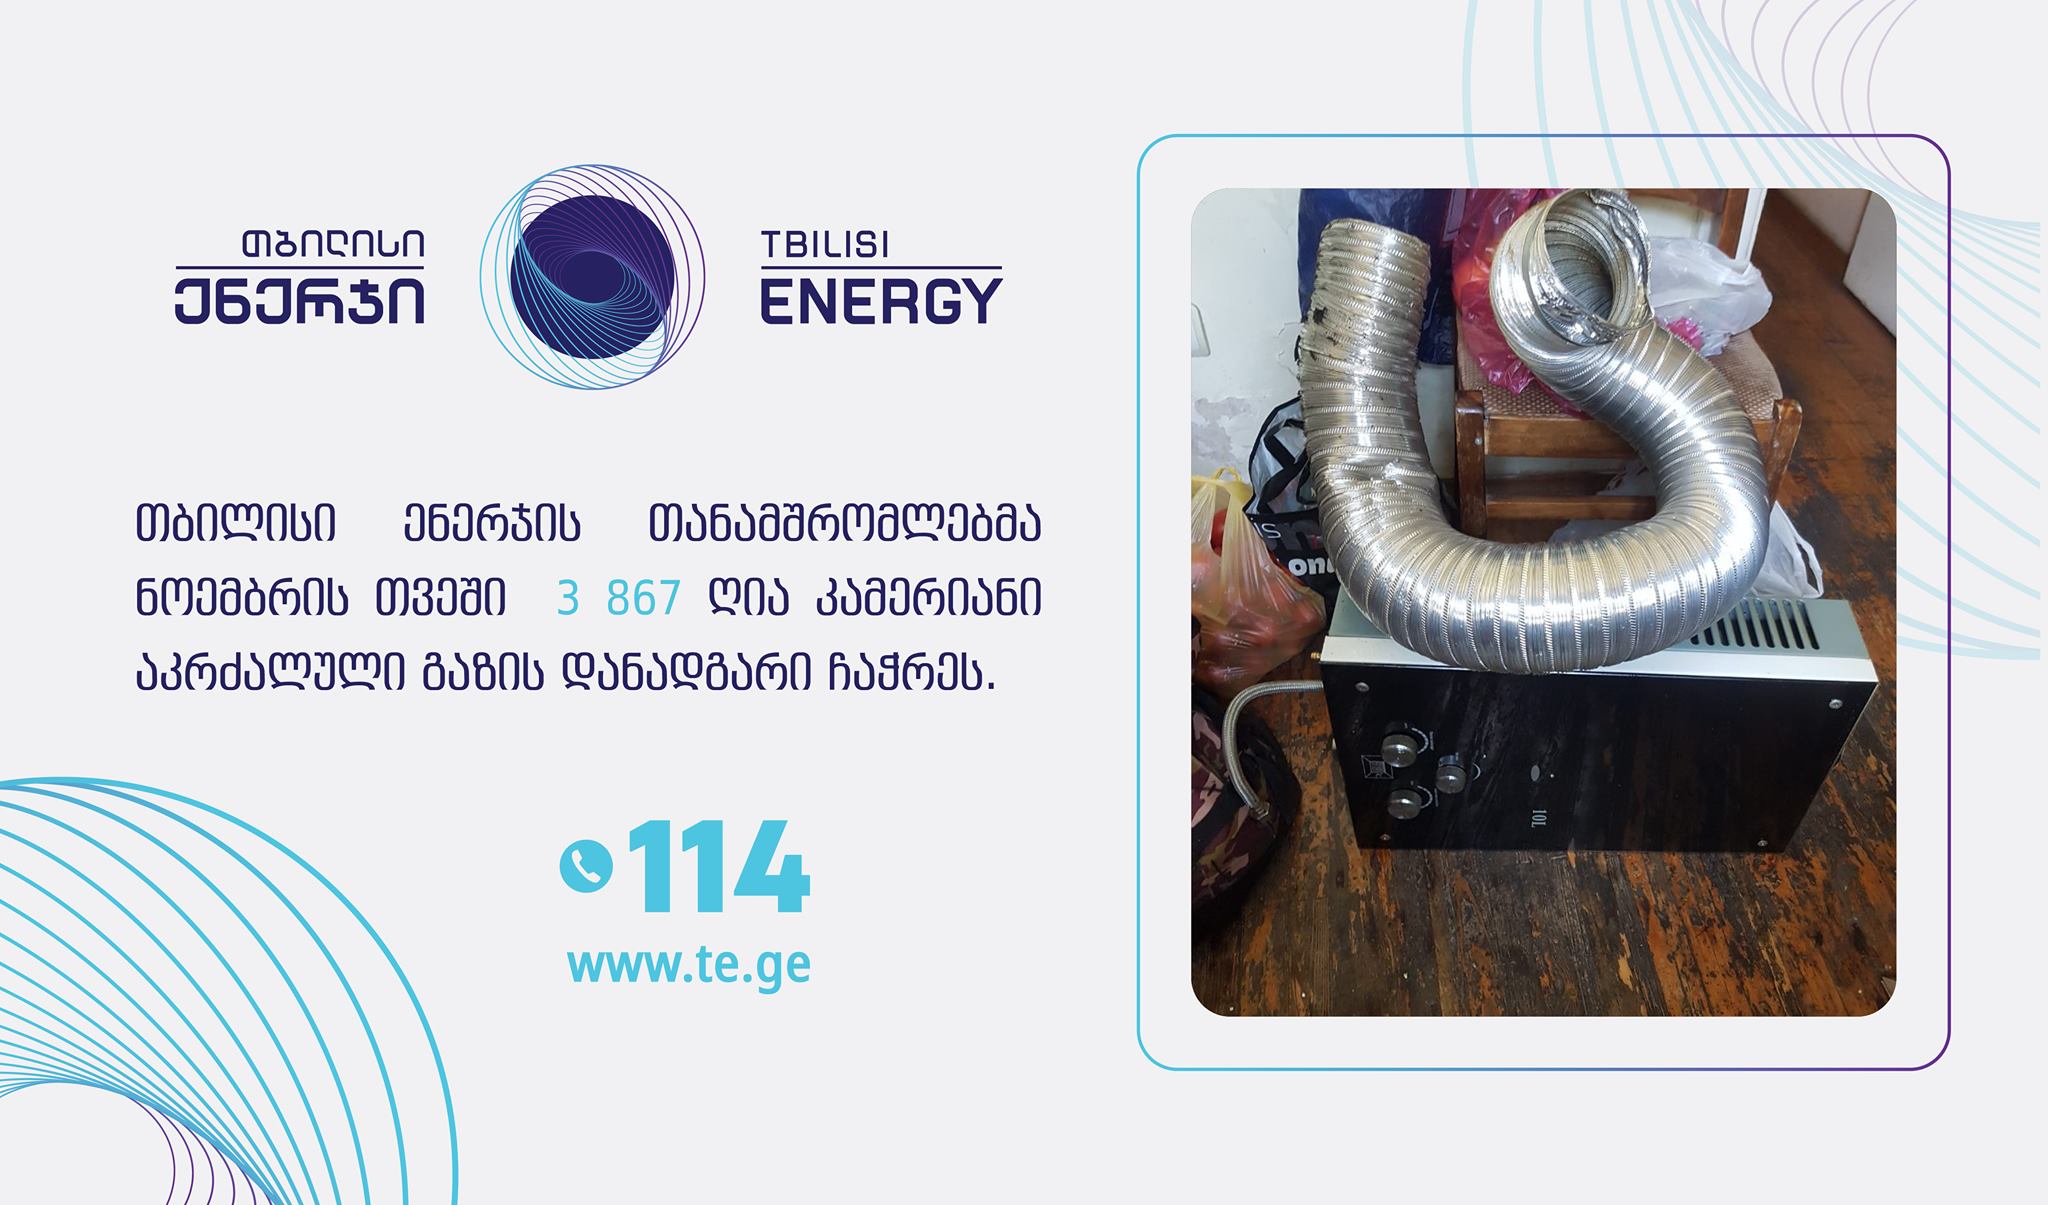 kompania-Tbilisi-enerji-gafrTxilebT